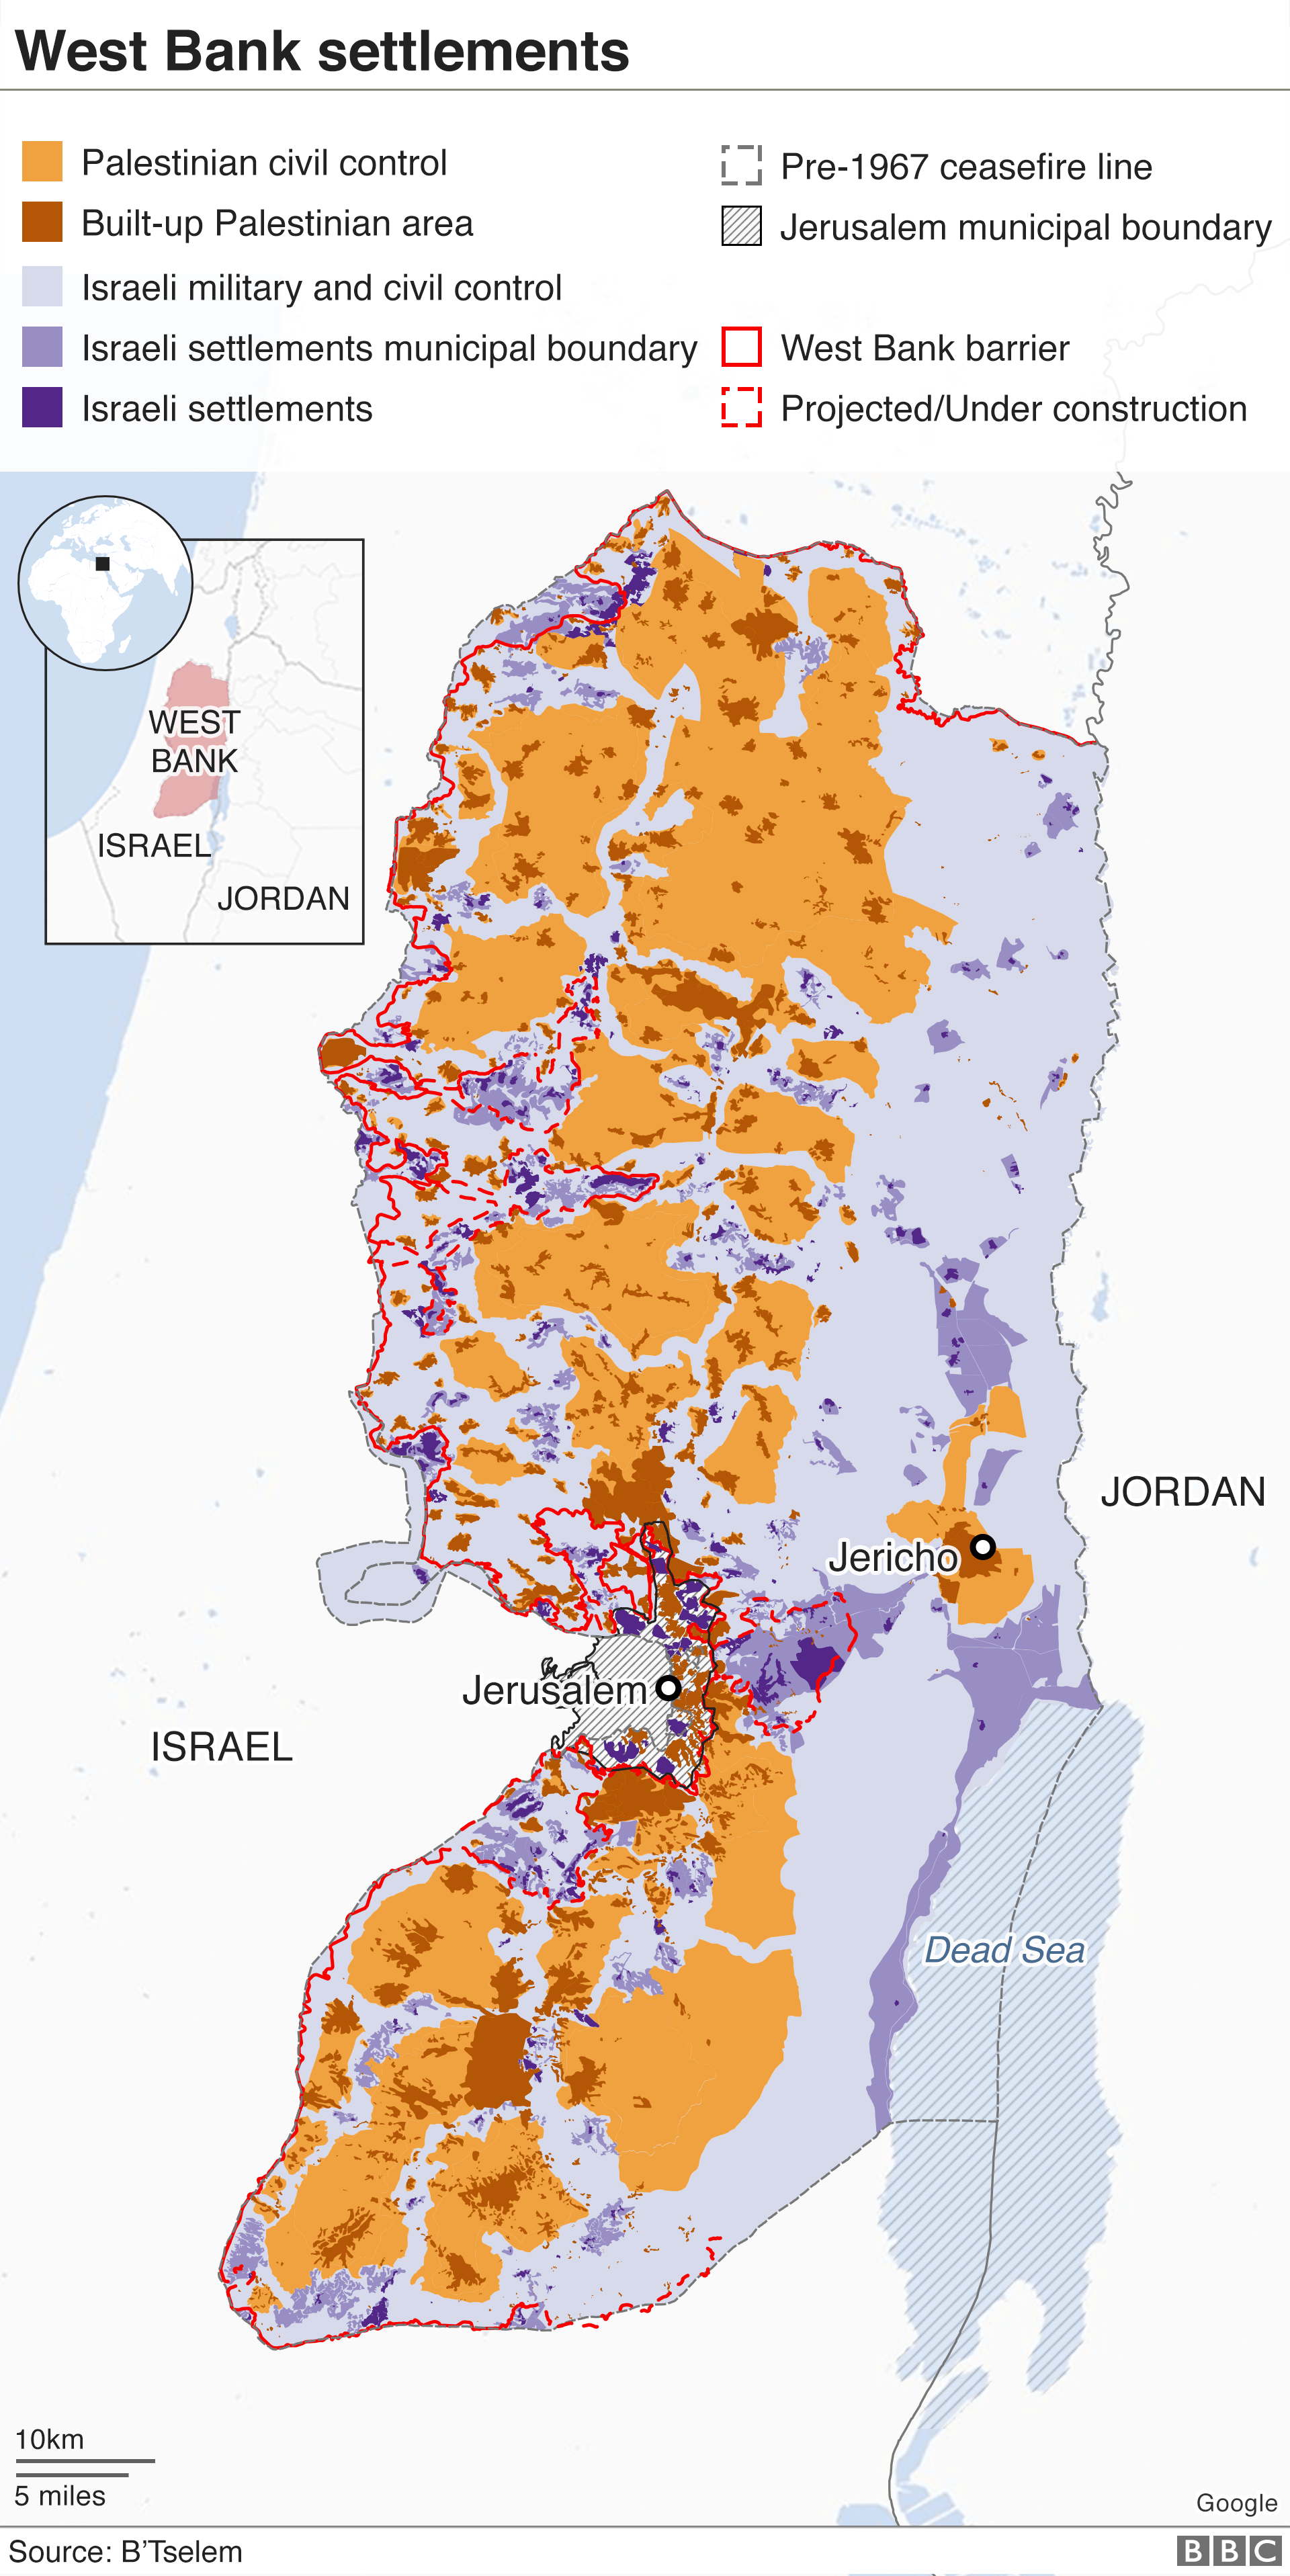  109737336 West Bank Settlements Oct 2019 640 3x Nc 